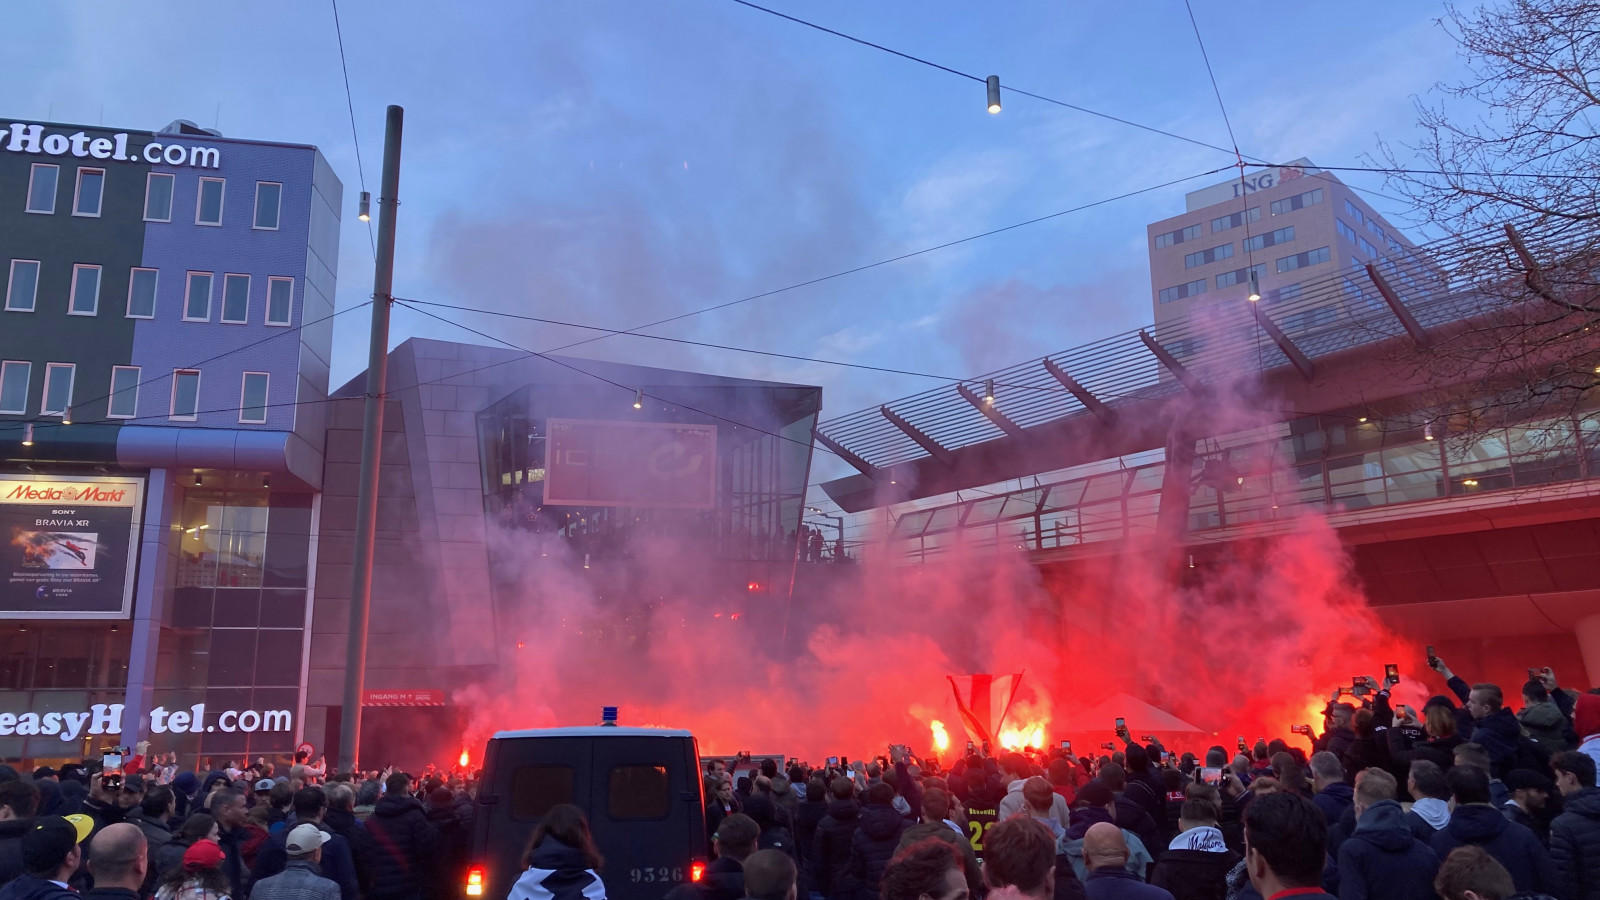 Entrada Ajax - Benfica